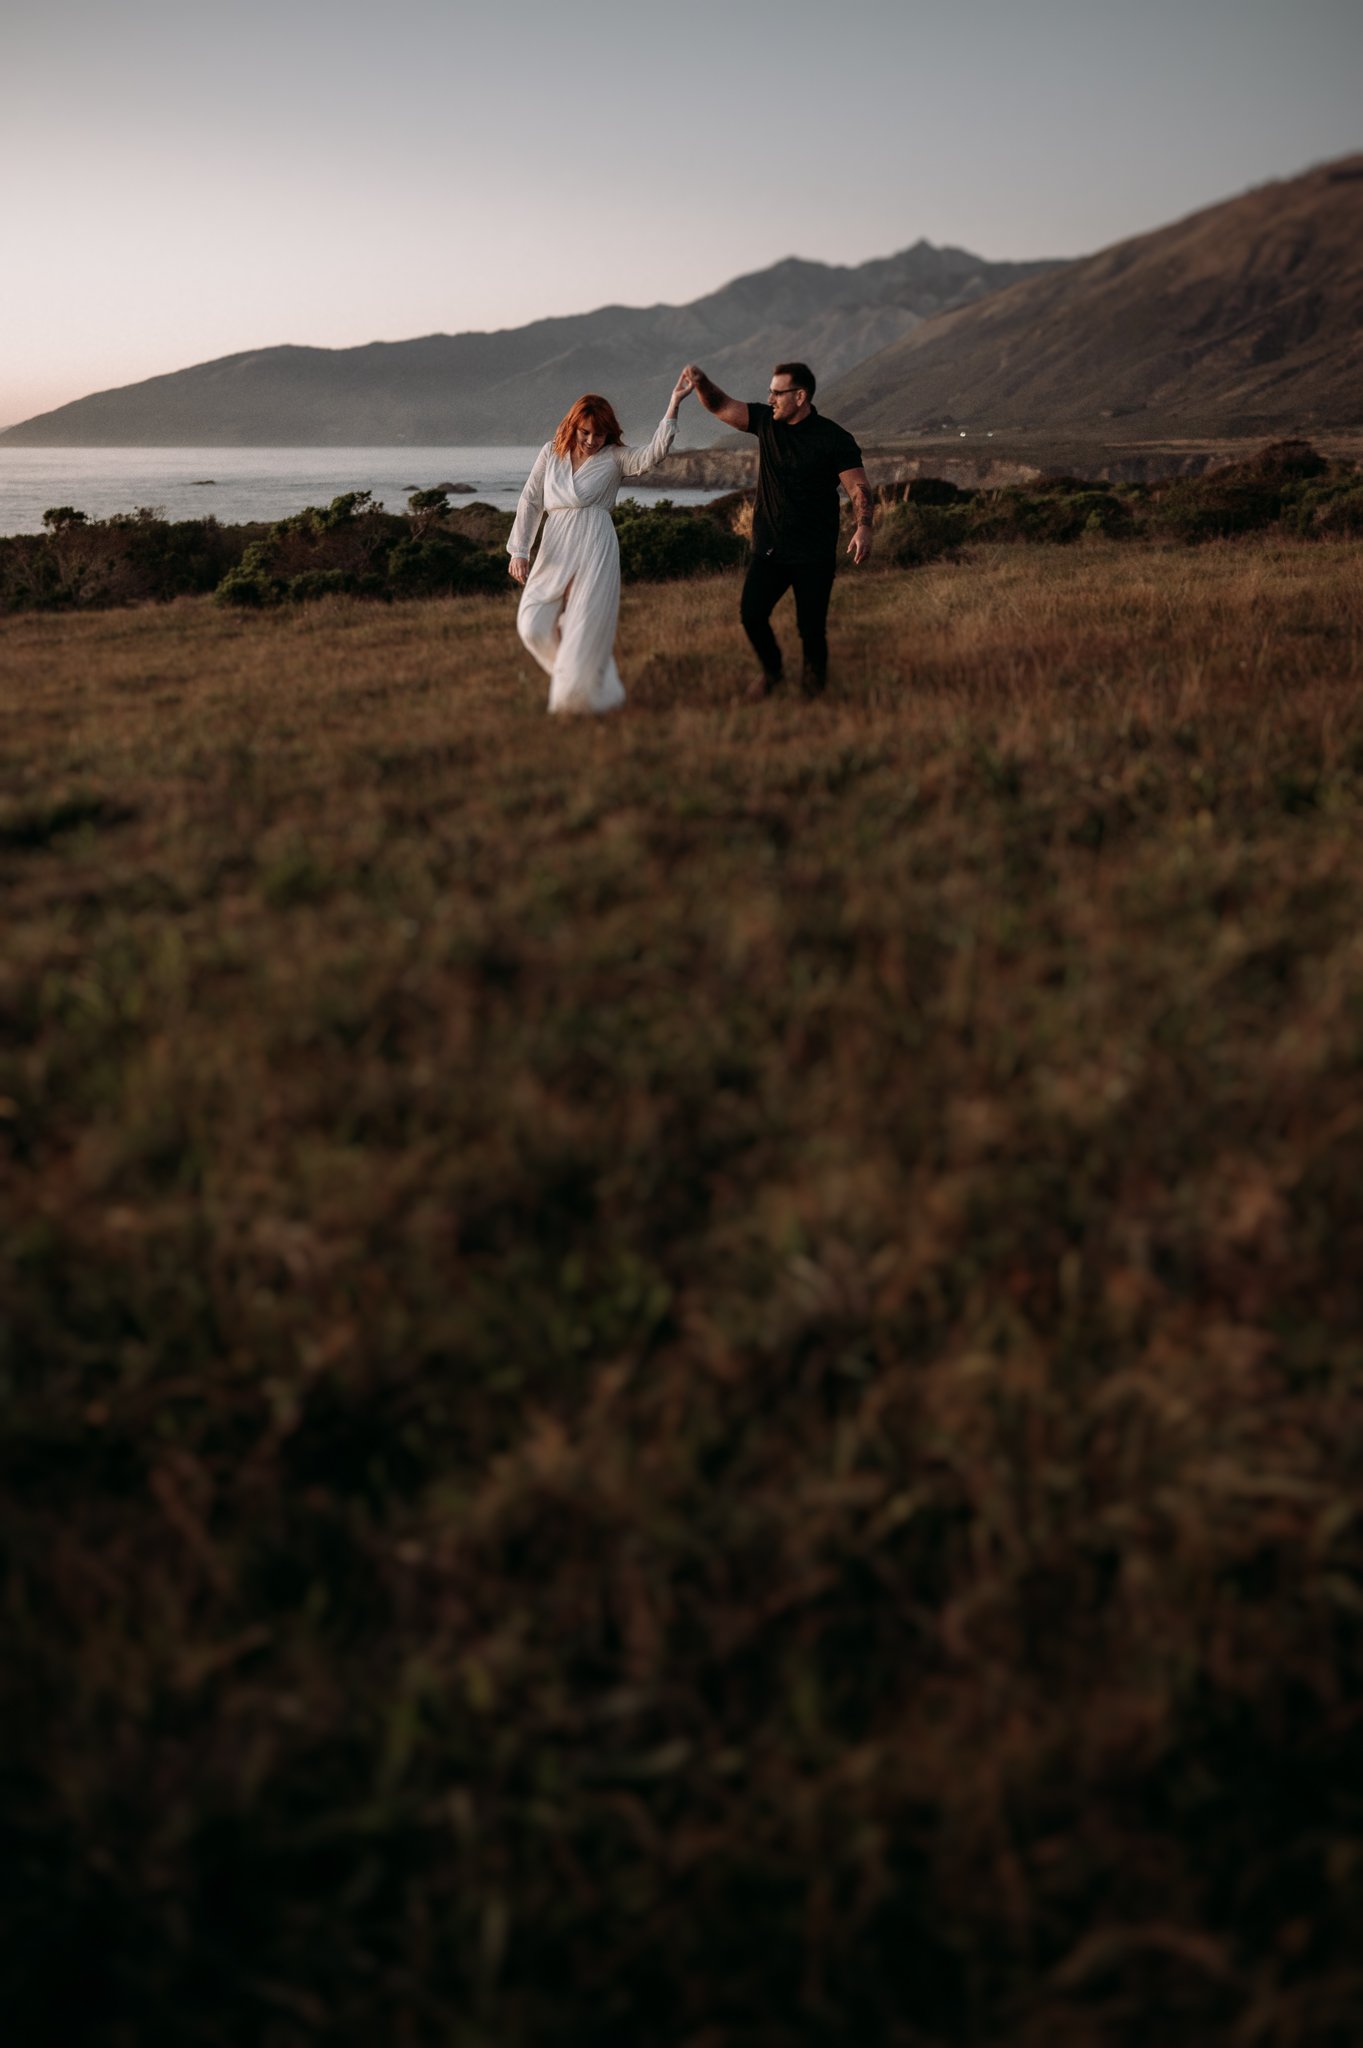 Couple-in-Meadow-Big-Sur-adventure-photography